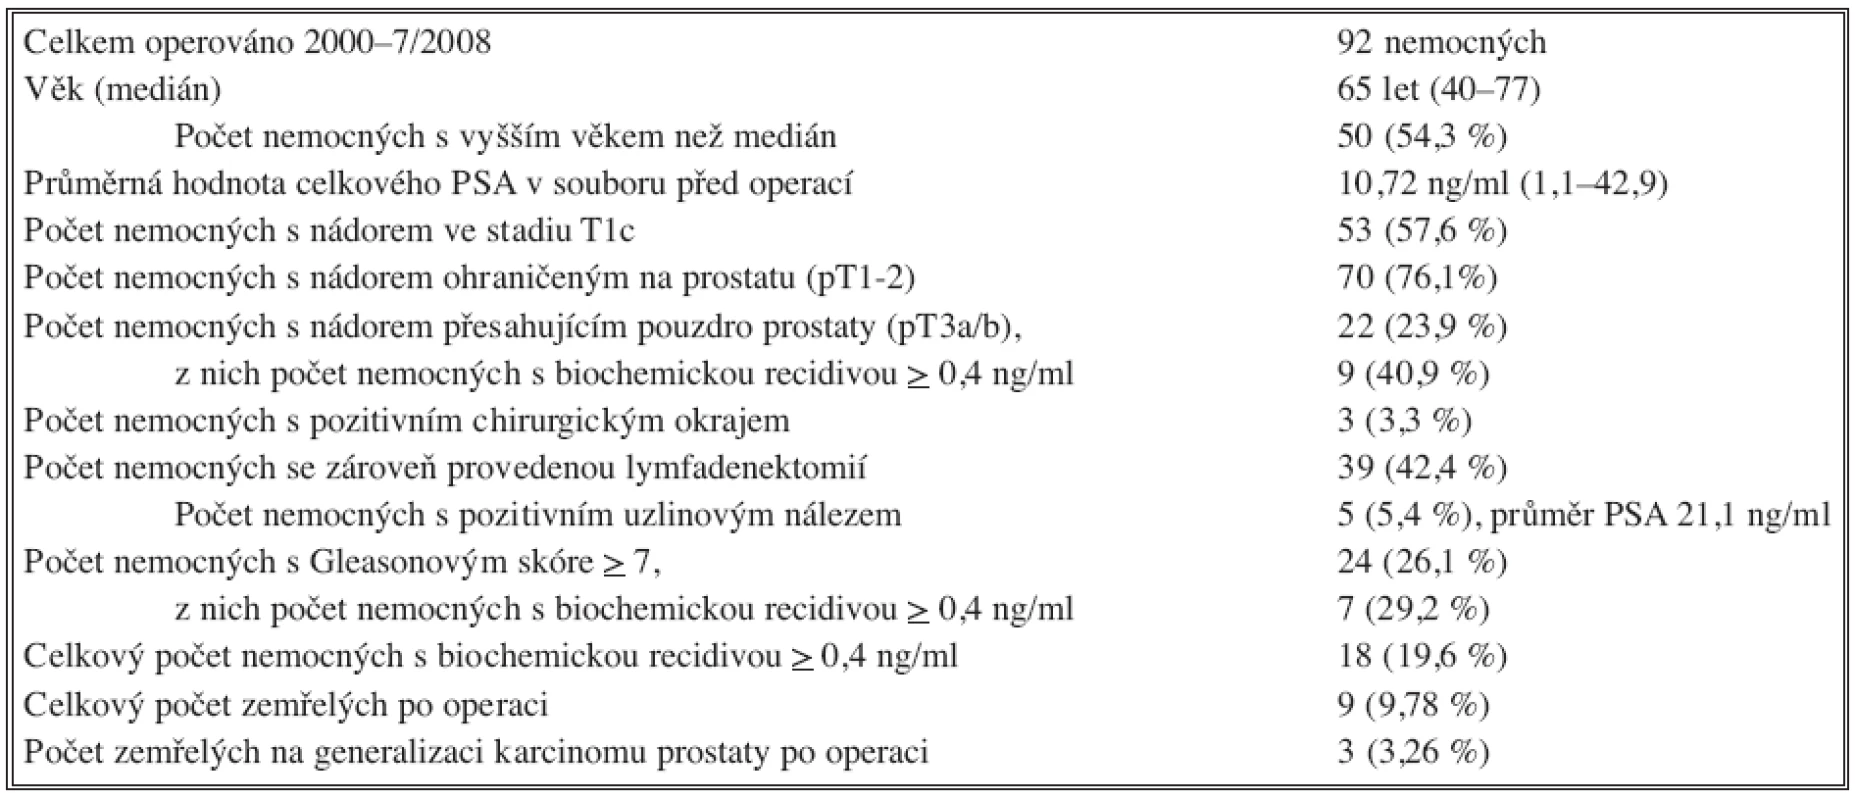 Celková charakteristika souboru
Tab. 1. Overall Characteristics of the Subject Group